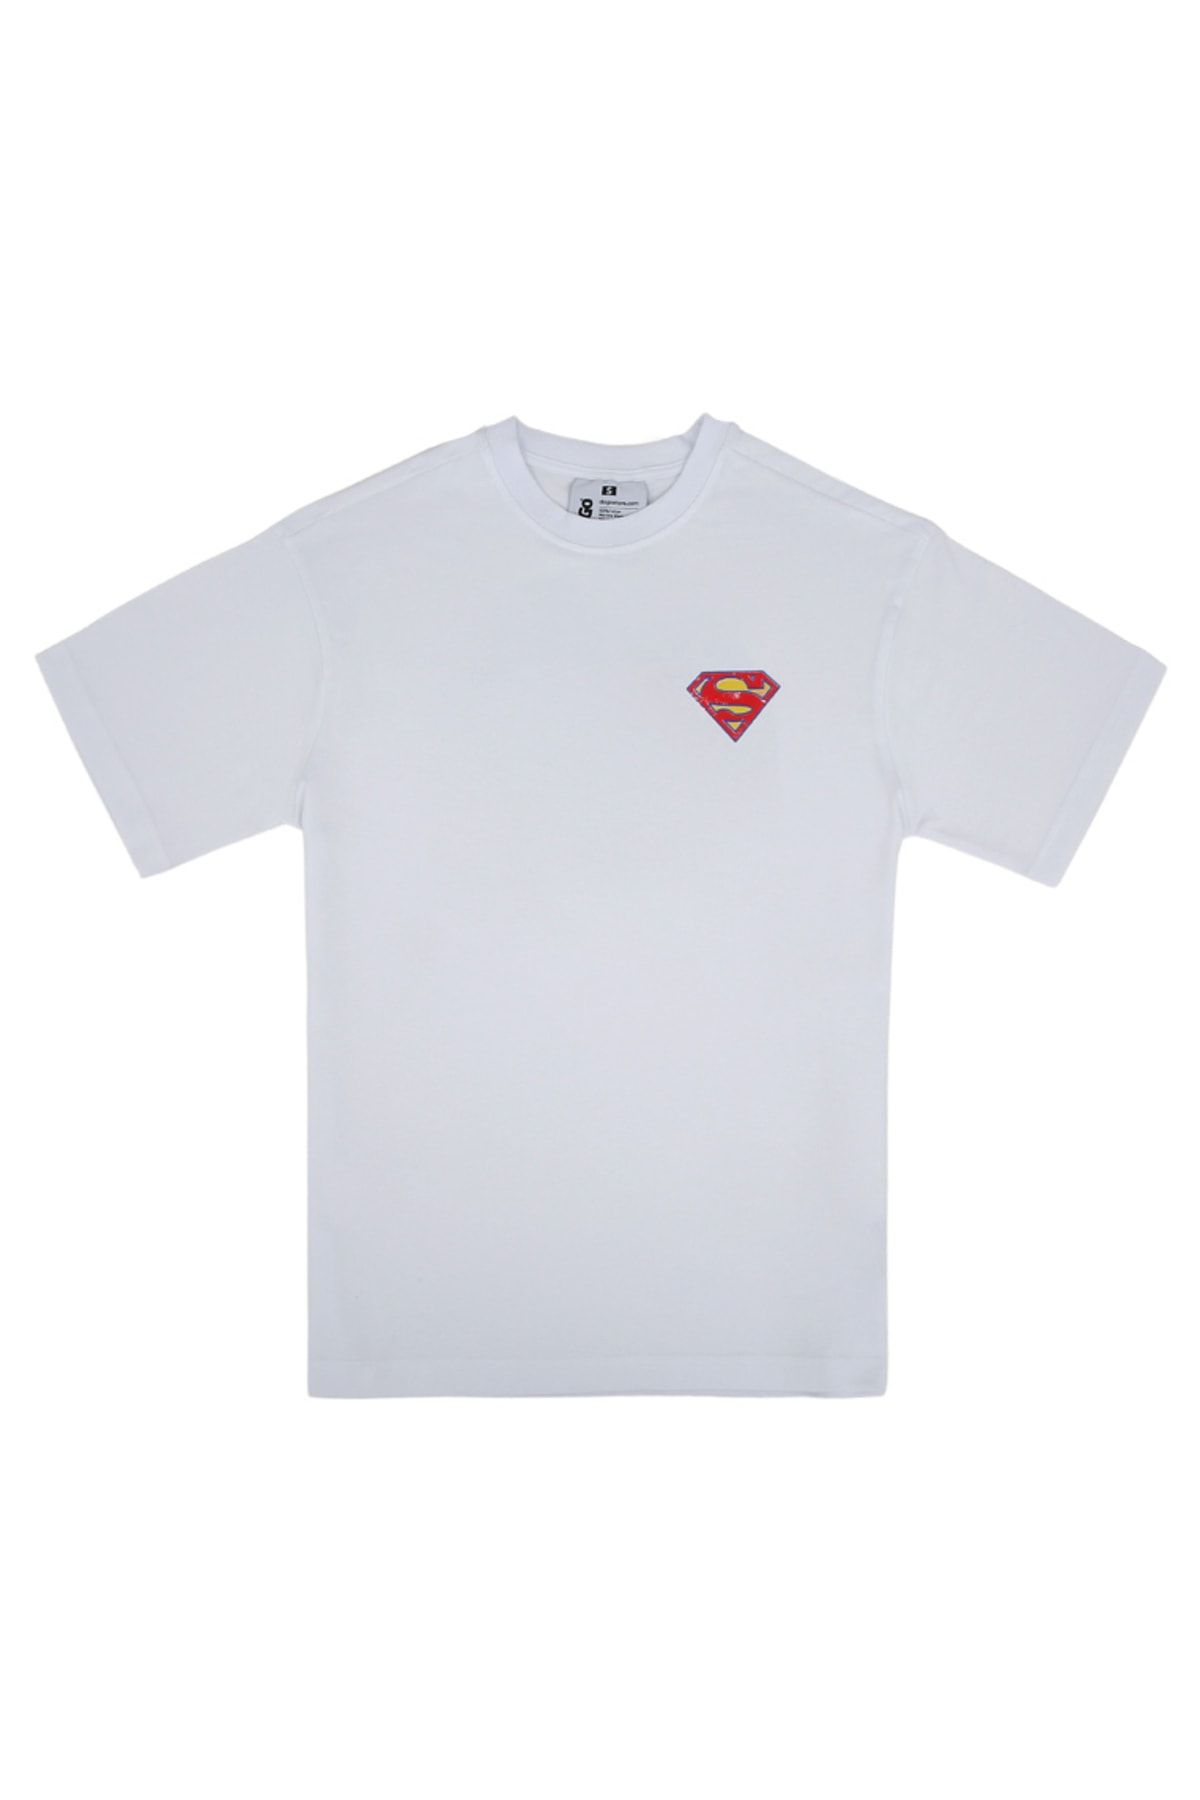 Dogo Unisex Vegan Beyaz T-Shirt - Warner Bros Superman Muscle Building Club Tasarım